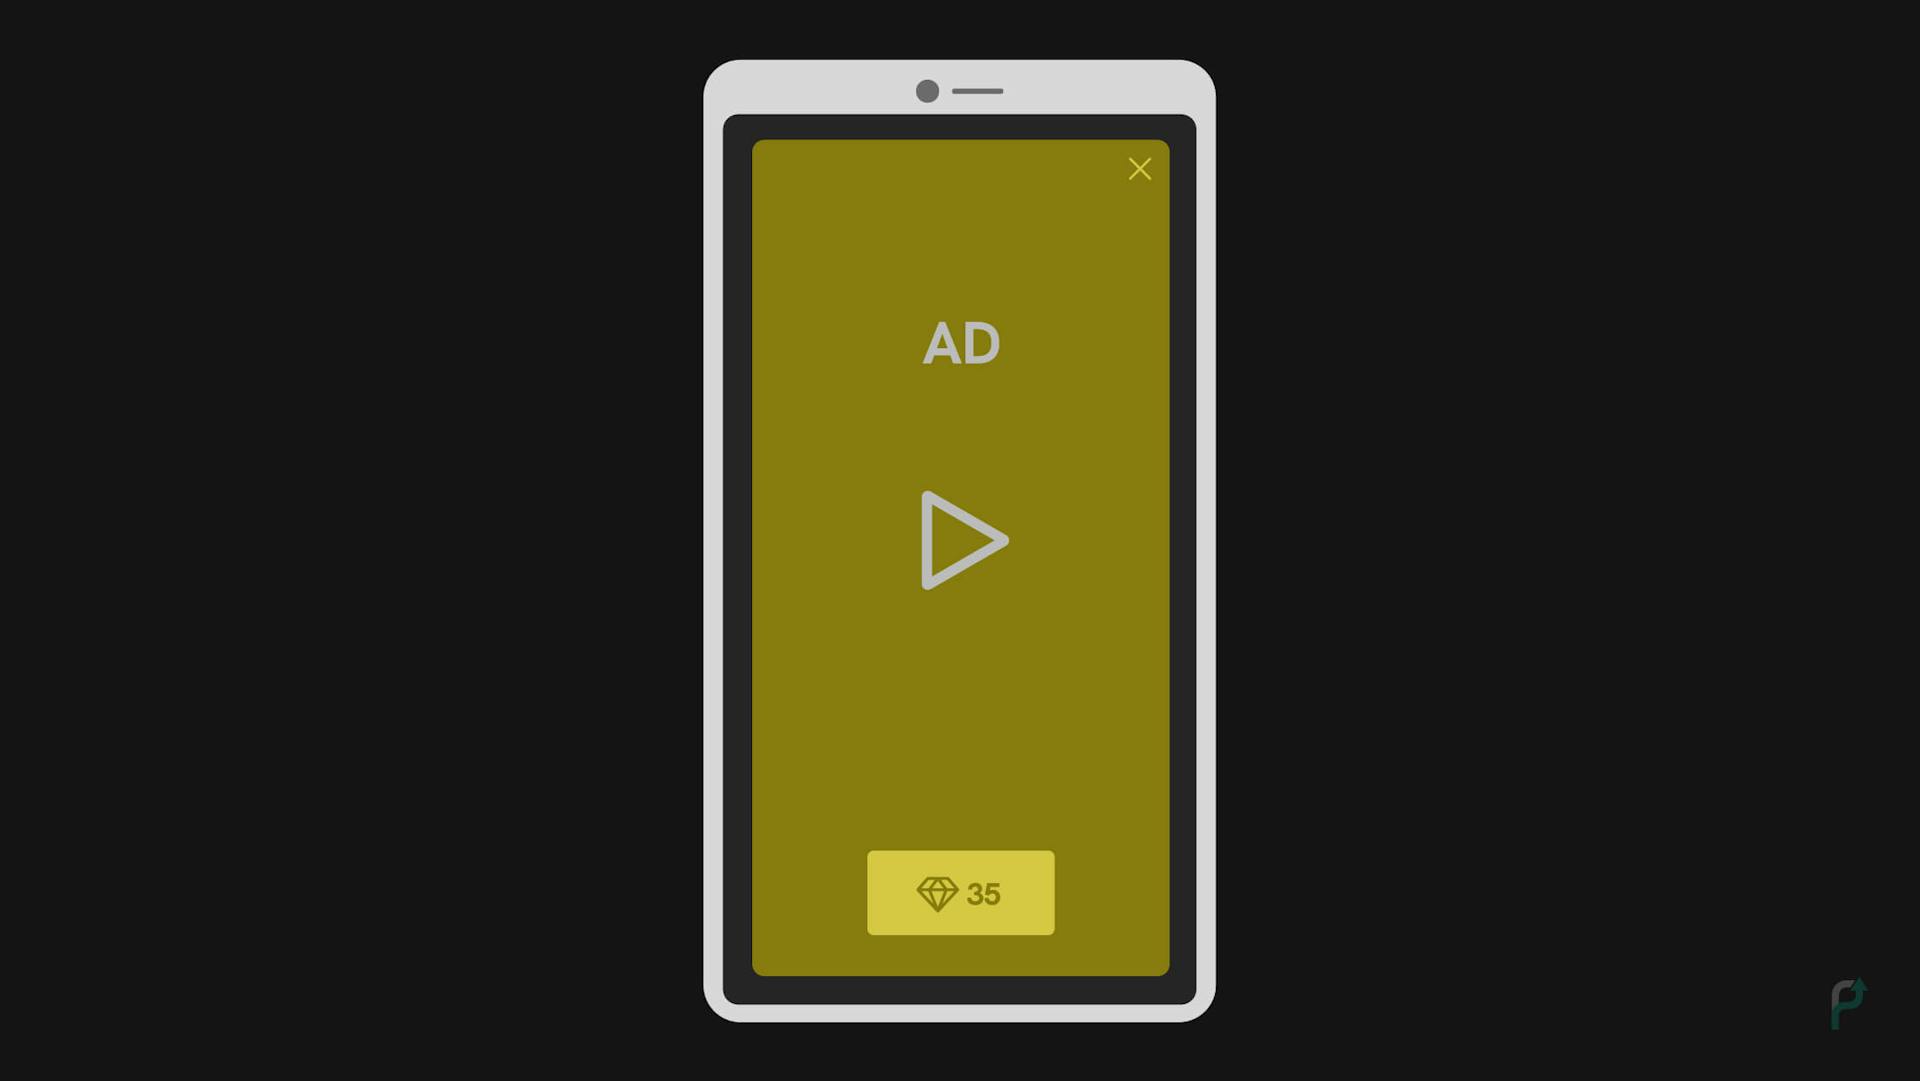 Boost ARPDAU with Rewarded Video Ads